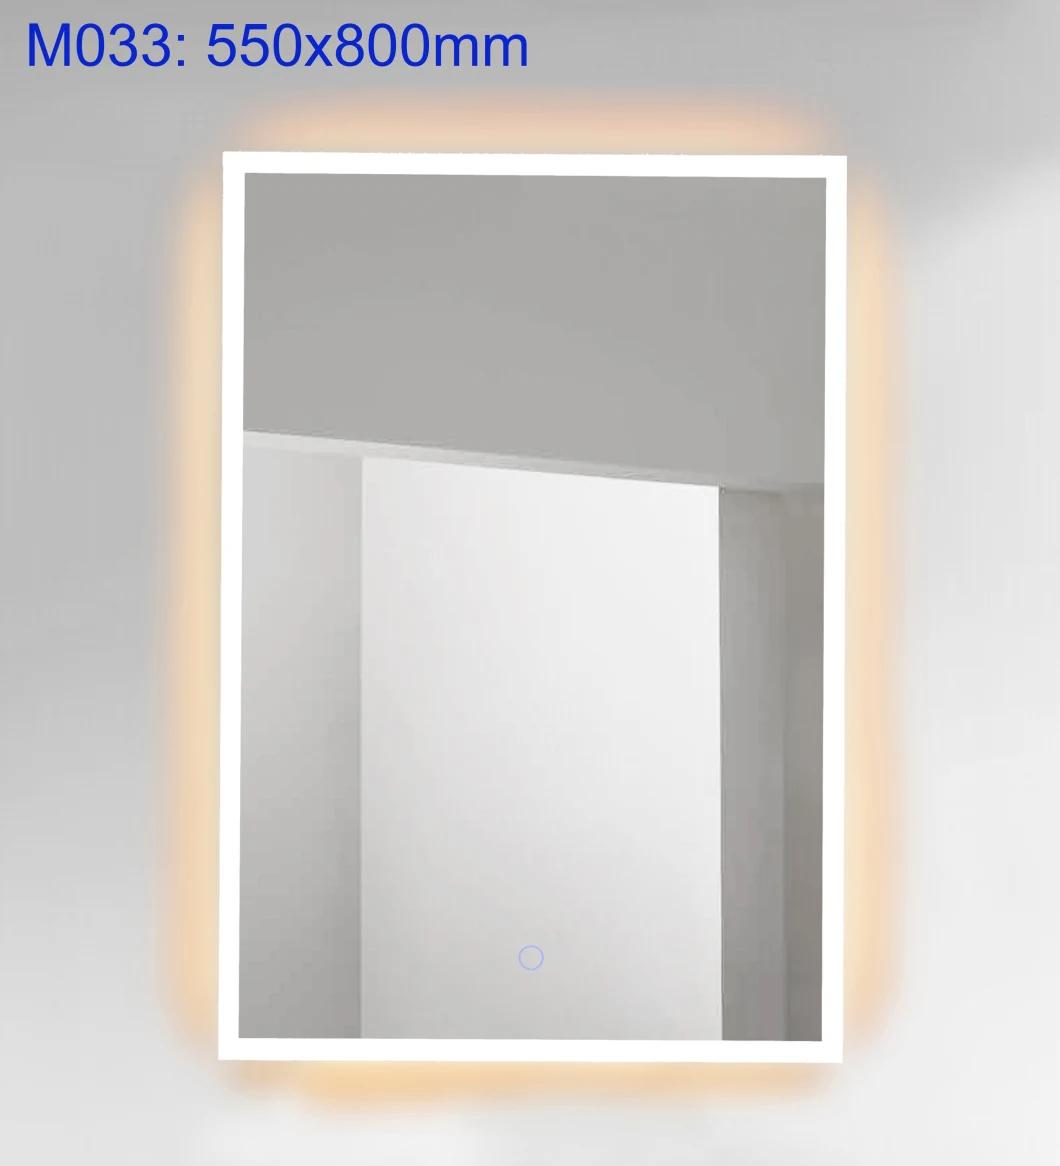 Saudi Arabian Markets Wall Mounted Touch Switch Bathroom Smart LED Mirror (M014)